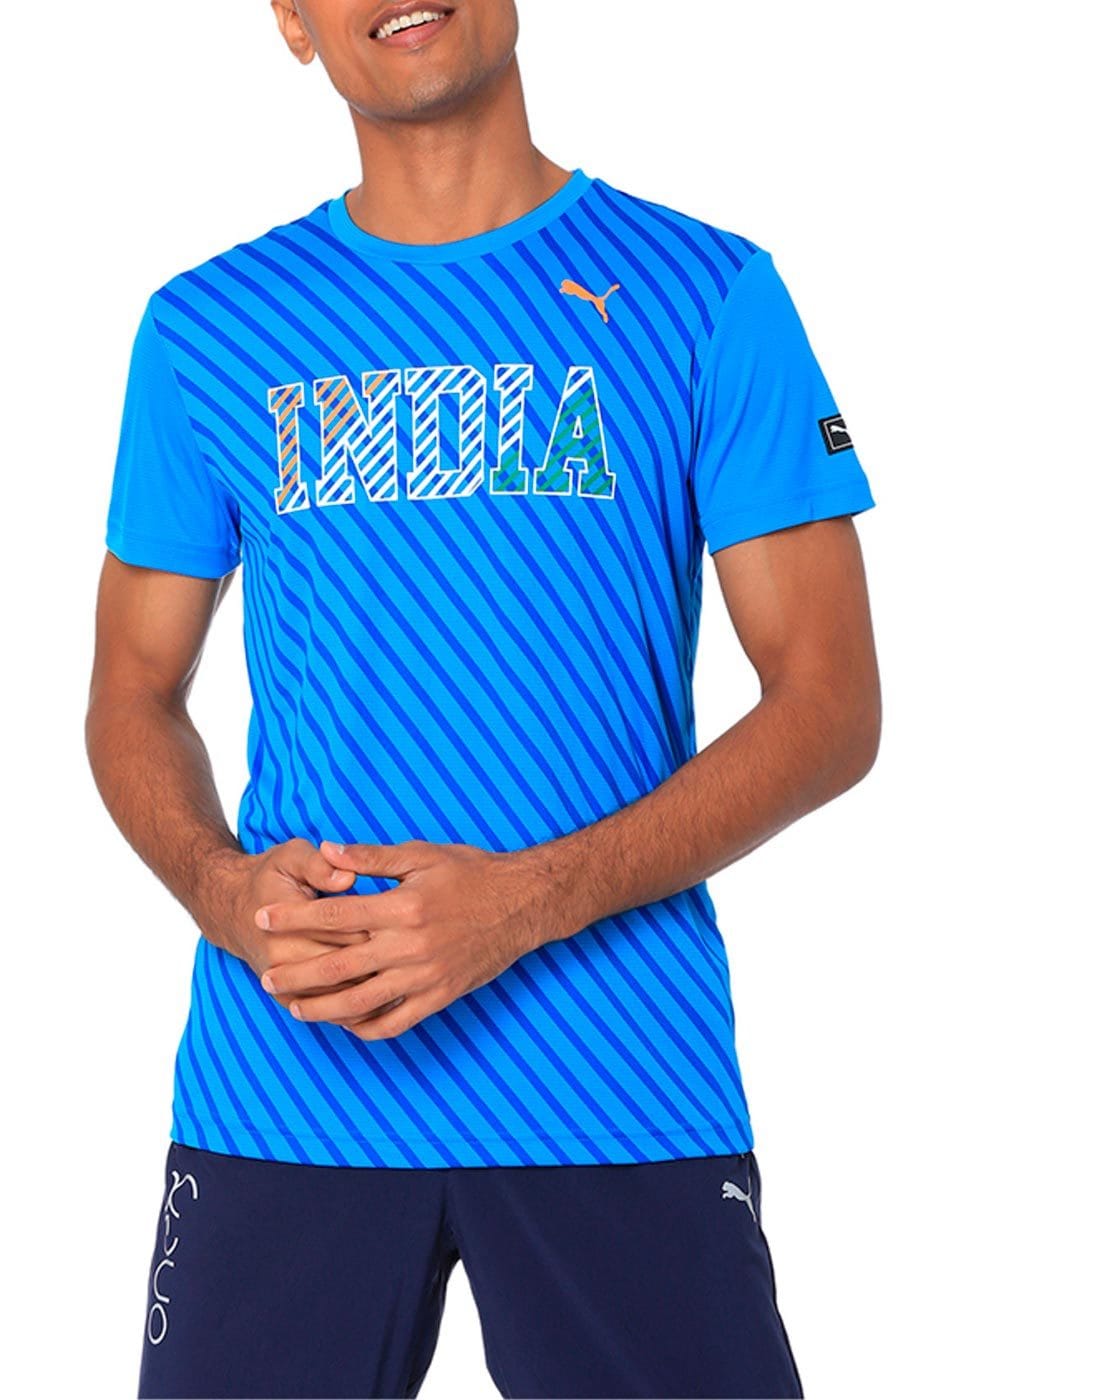 buy team india t shirt